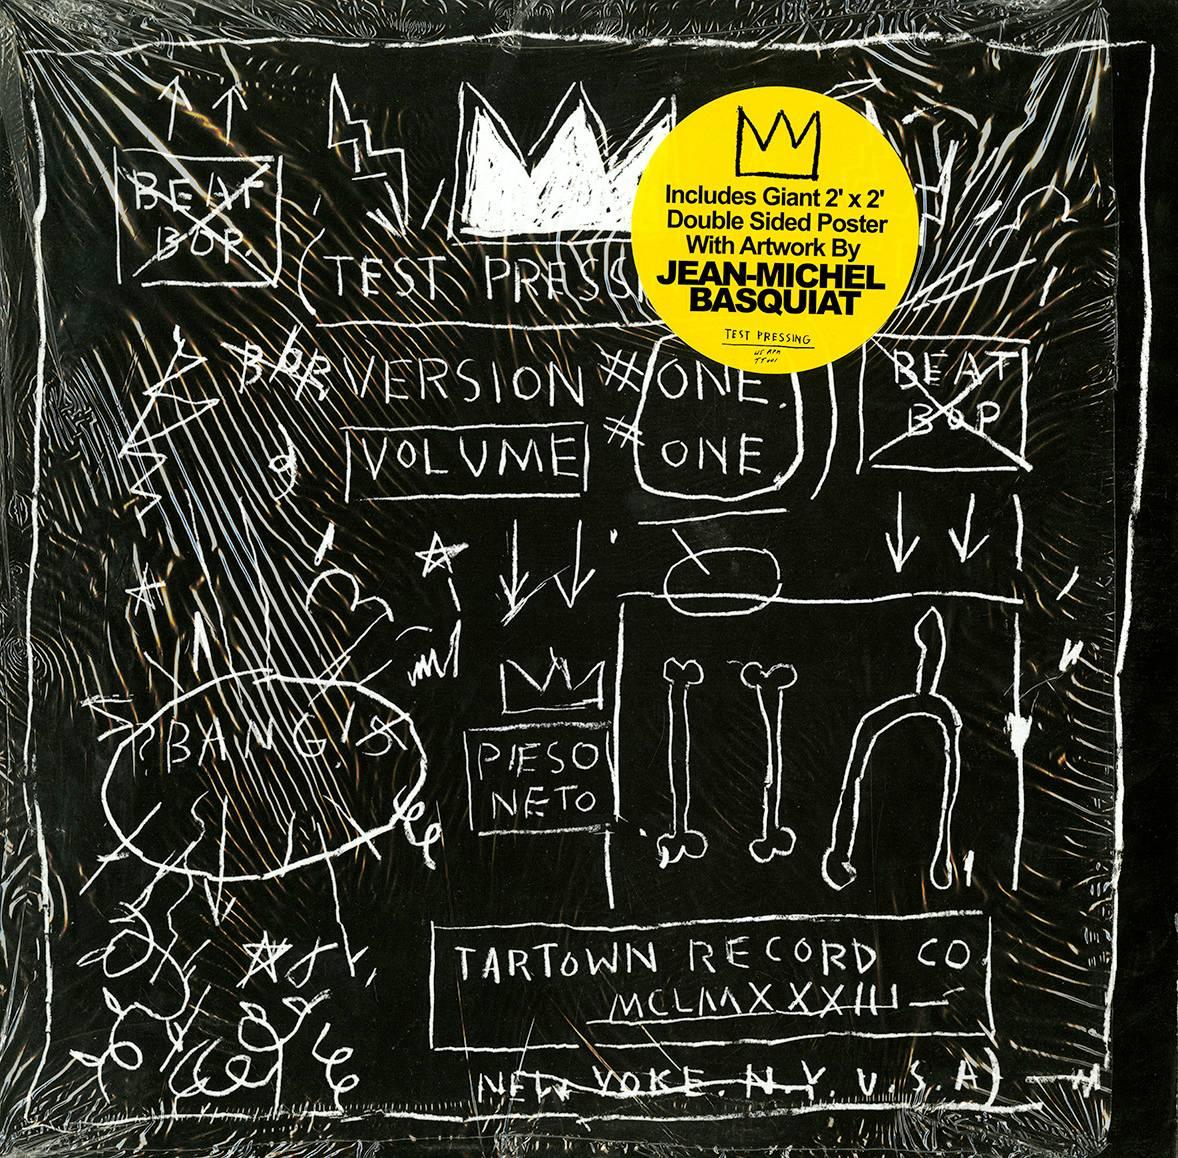 Rammellzee vs. K-Rob Beat Bop LP and Poster - Art by Jean-Michel Basquiat